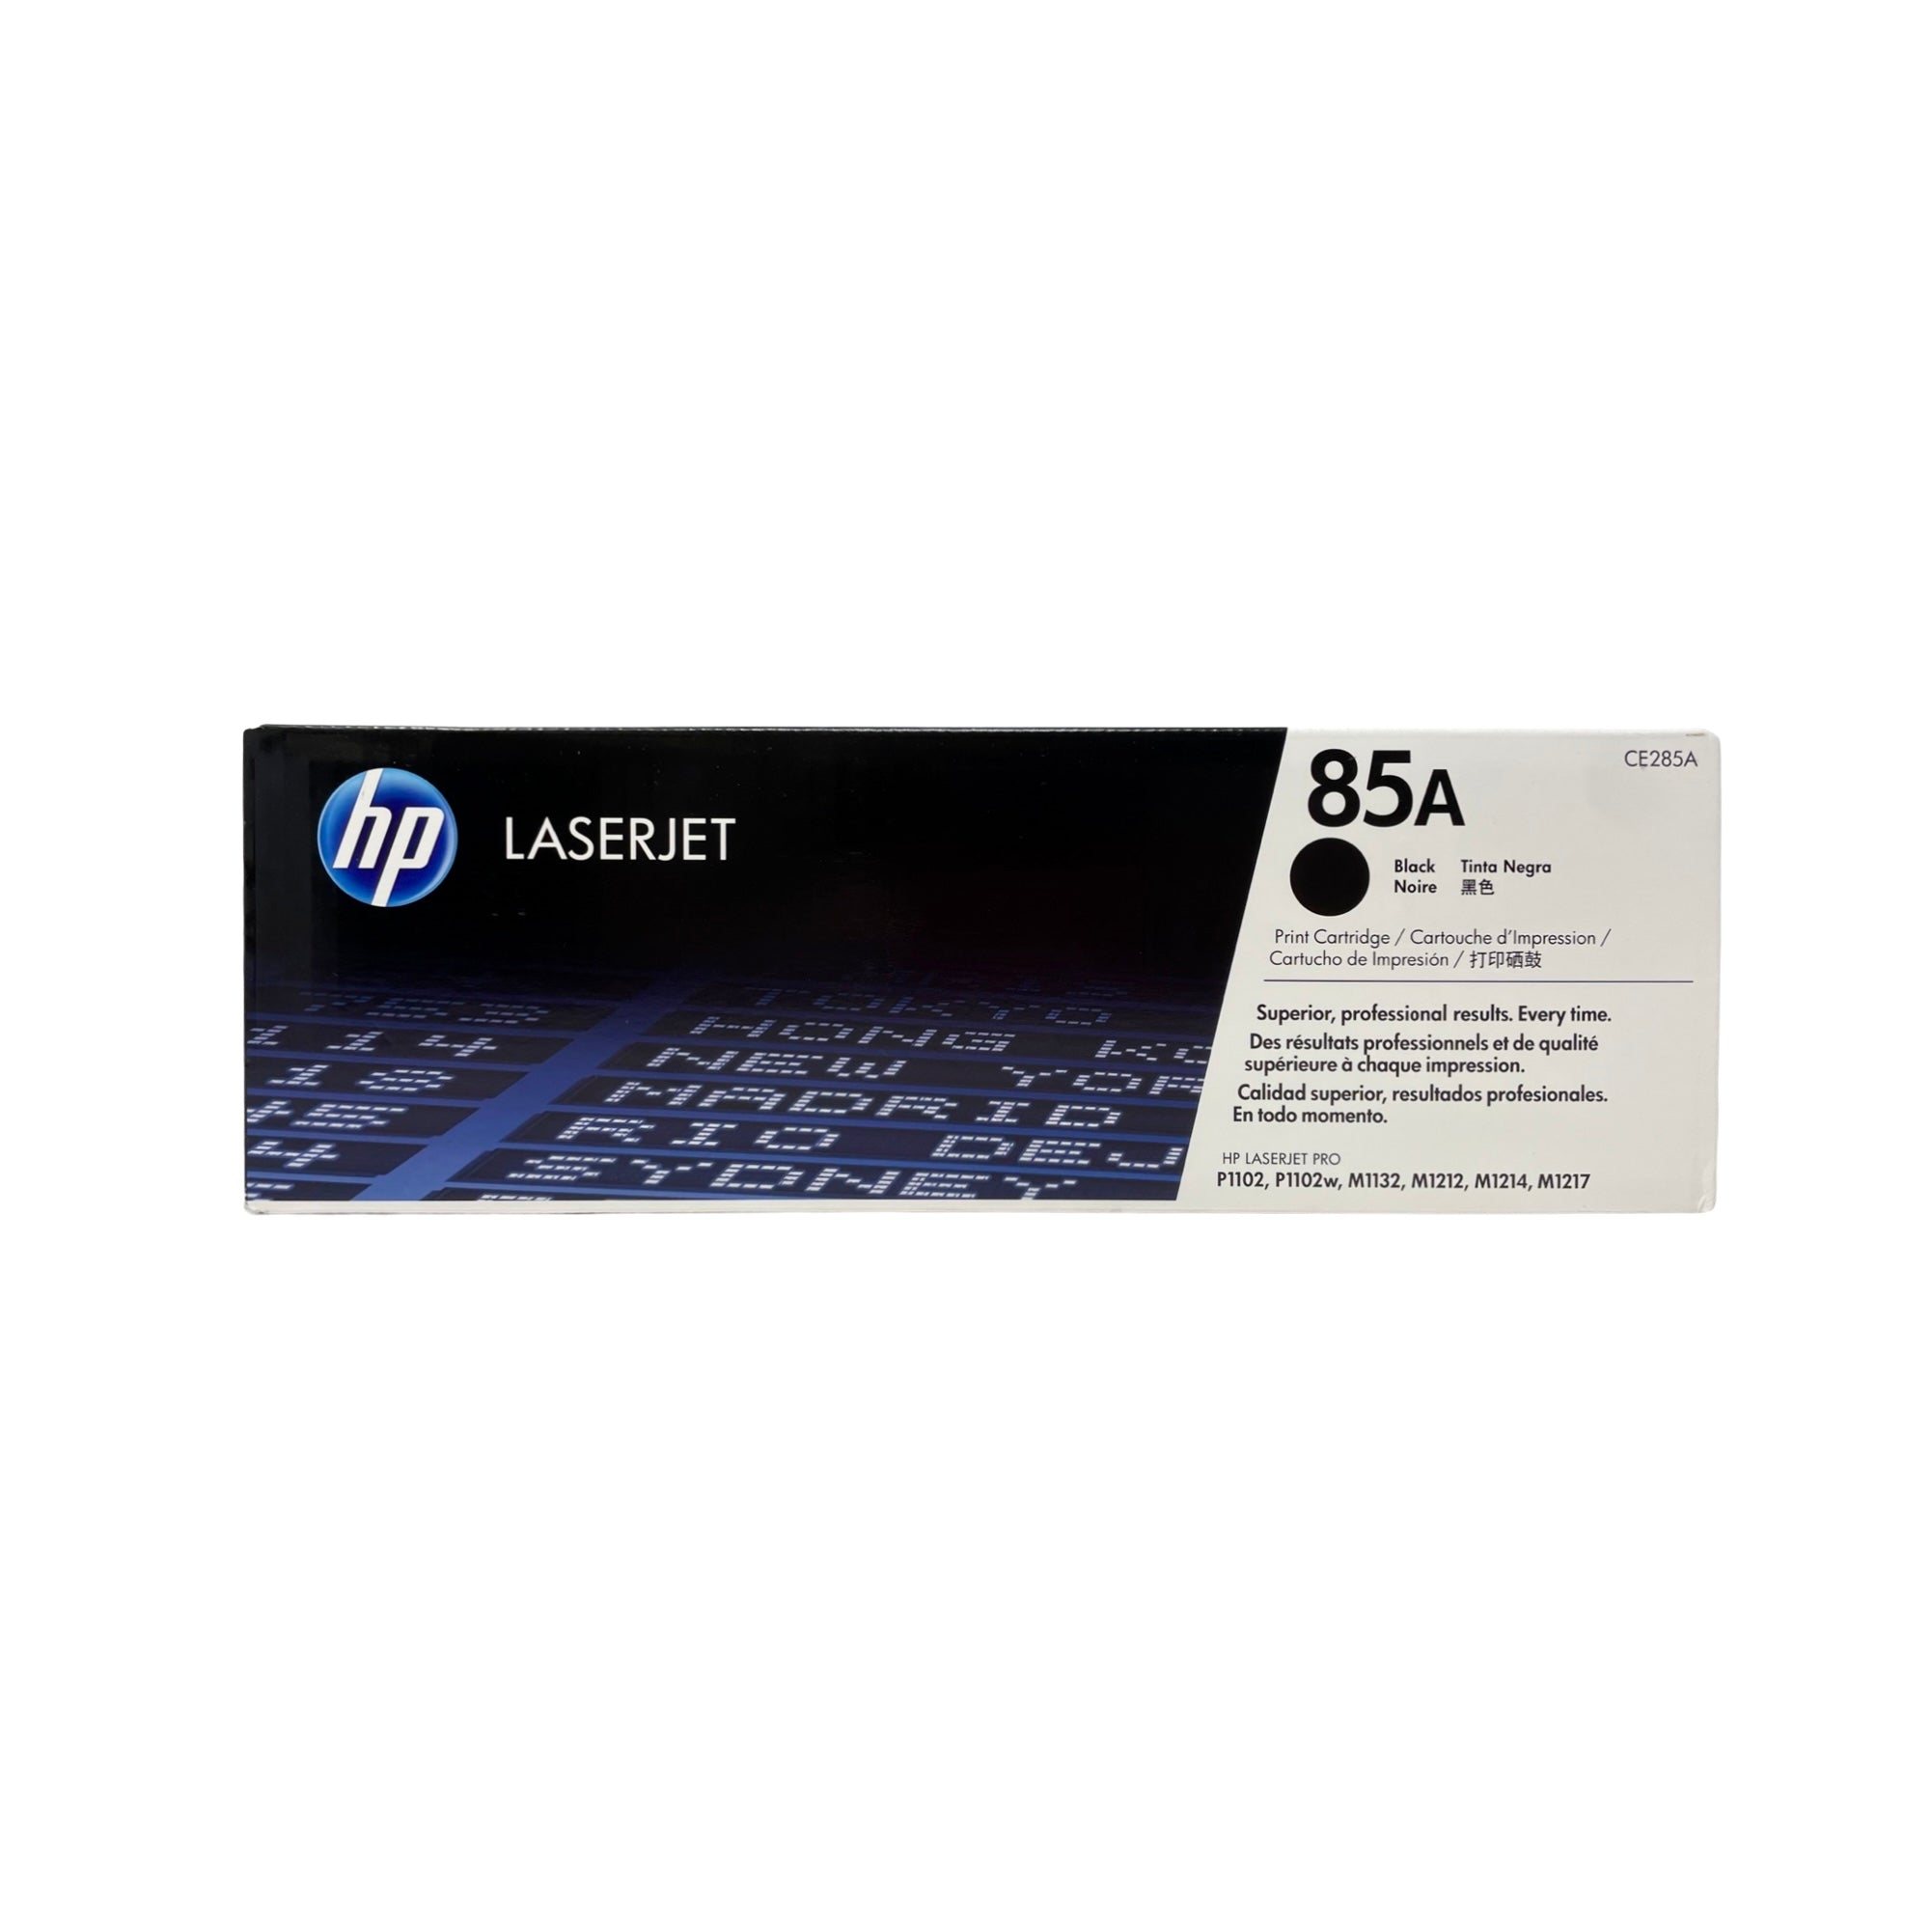 Saga Articulación información Discount HP Laserjet Pro M1132 Mfp Toner Cartridges | Genuine HP® Printer Toner  Cartridges